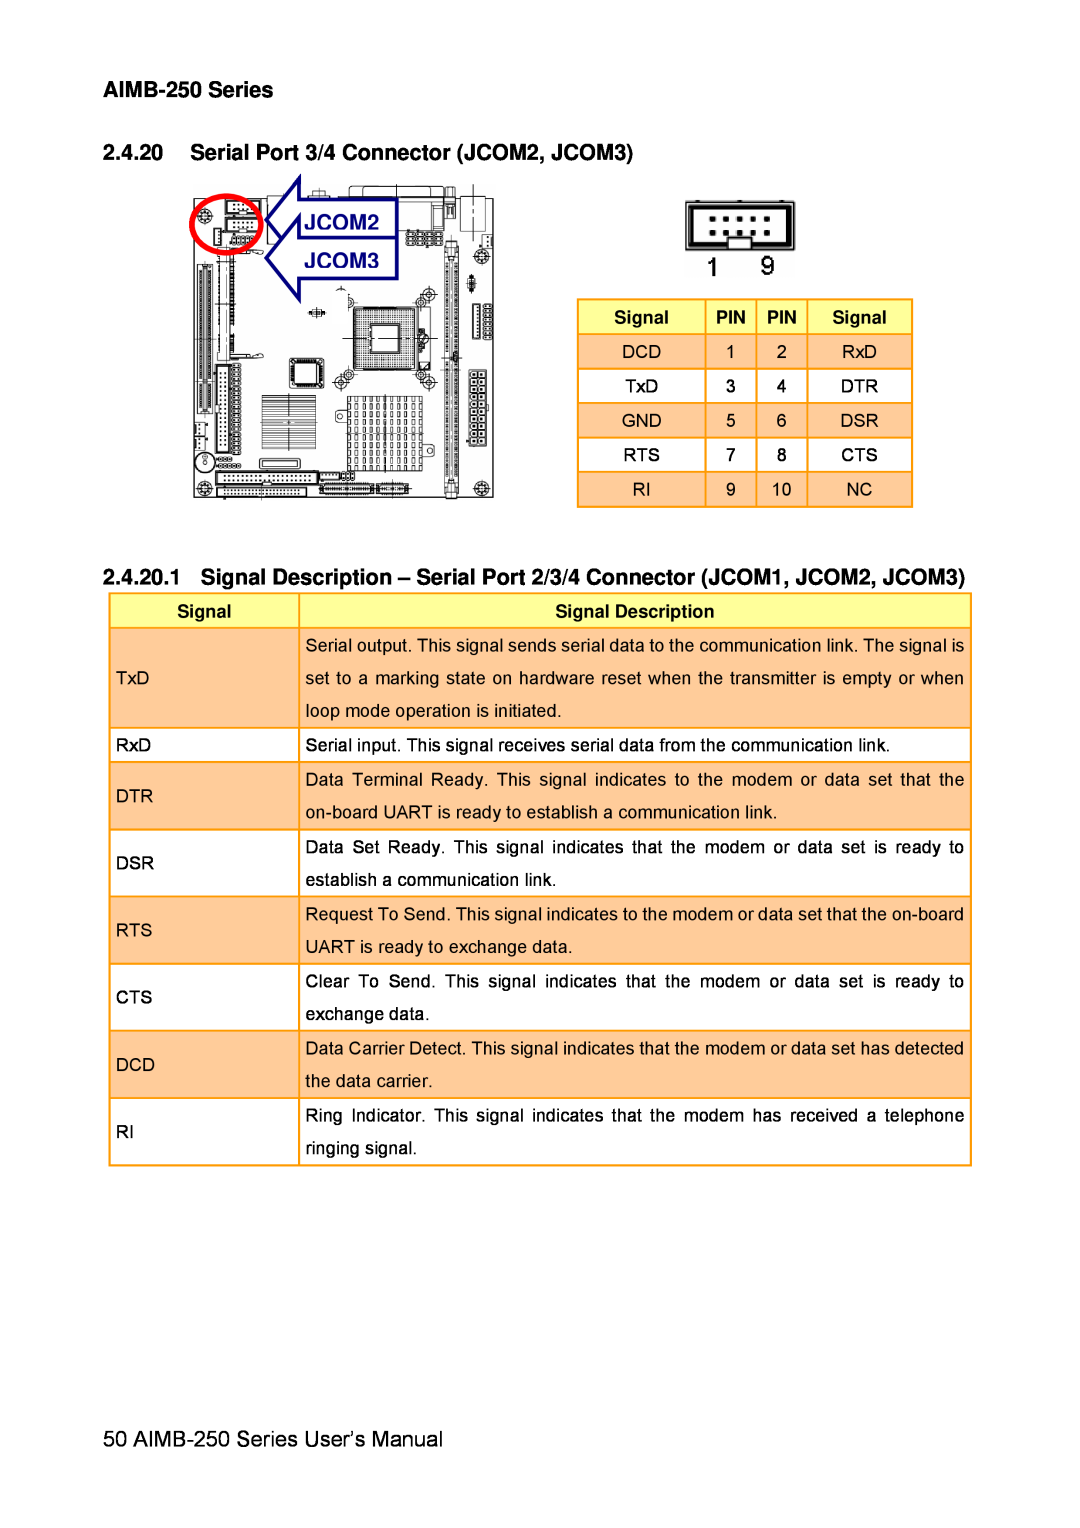 Advantech user manual AIMB-250 Series 2.4.20 Serial Port 3/4 Connector JCOM2, JCOM3, JCOM2 JCOM3, Signal Description 